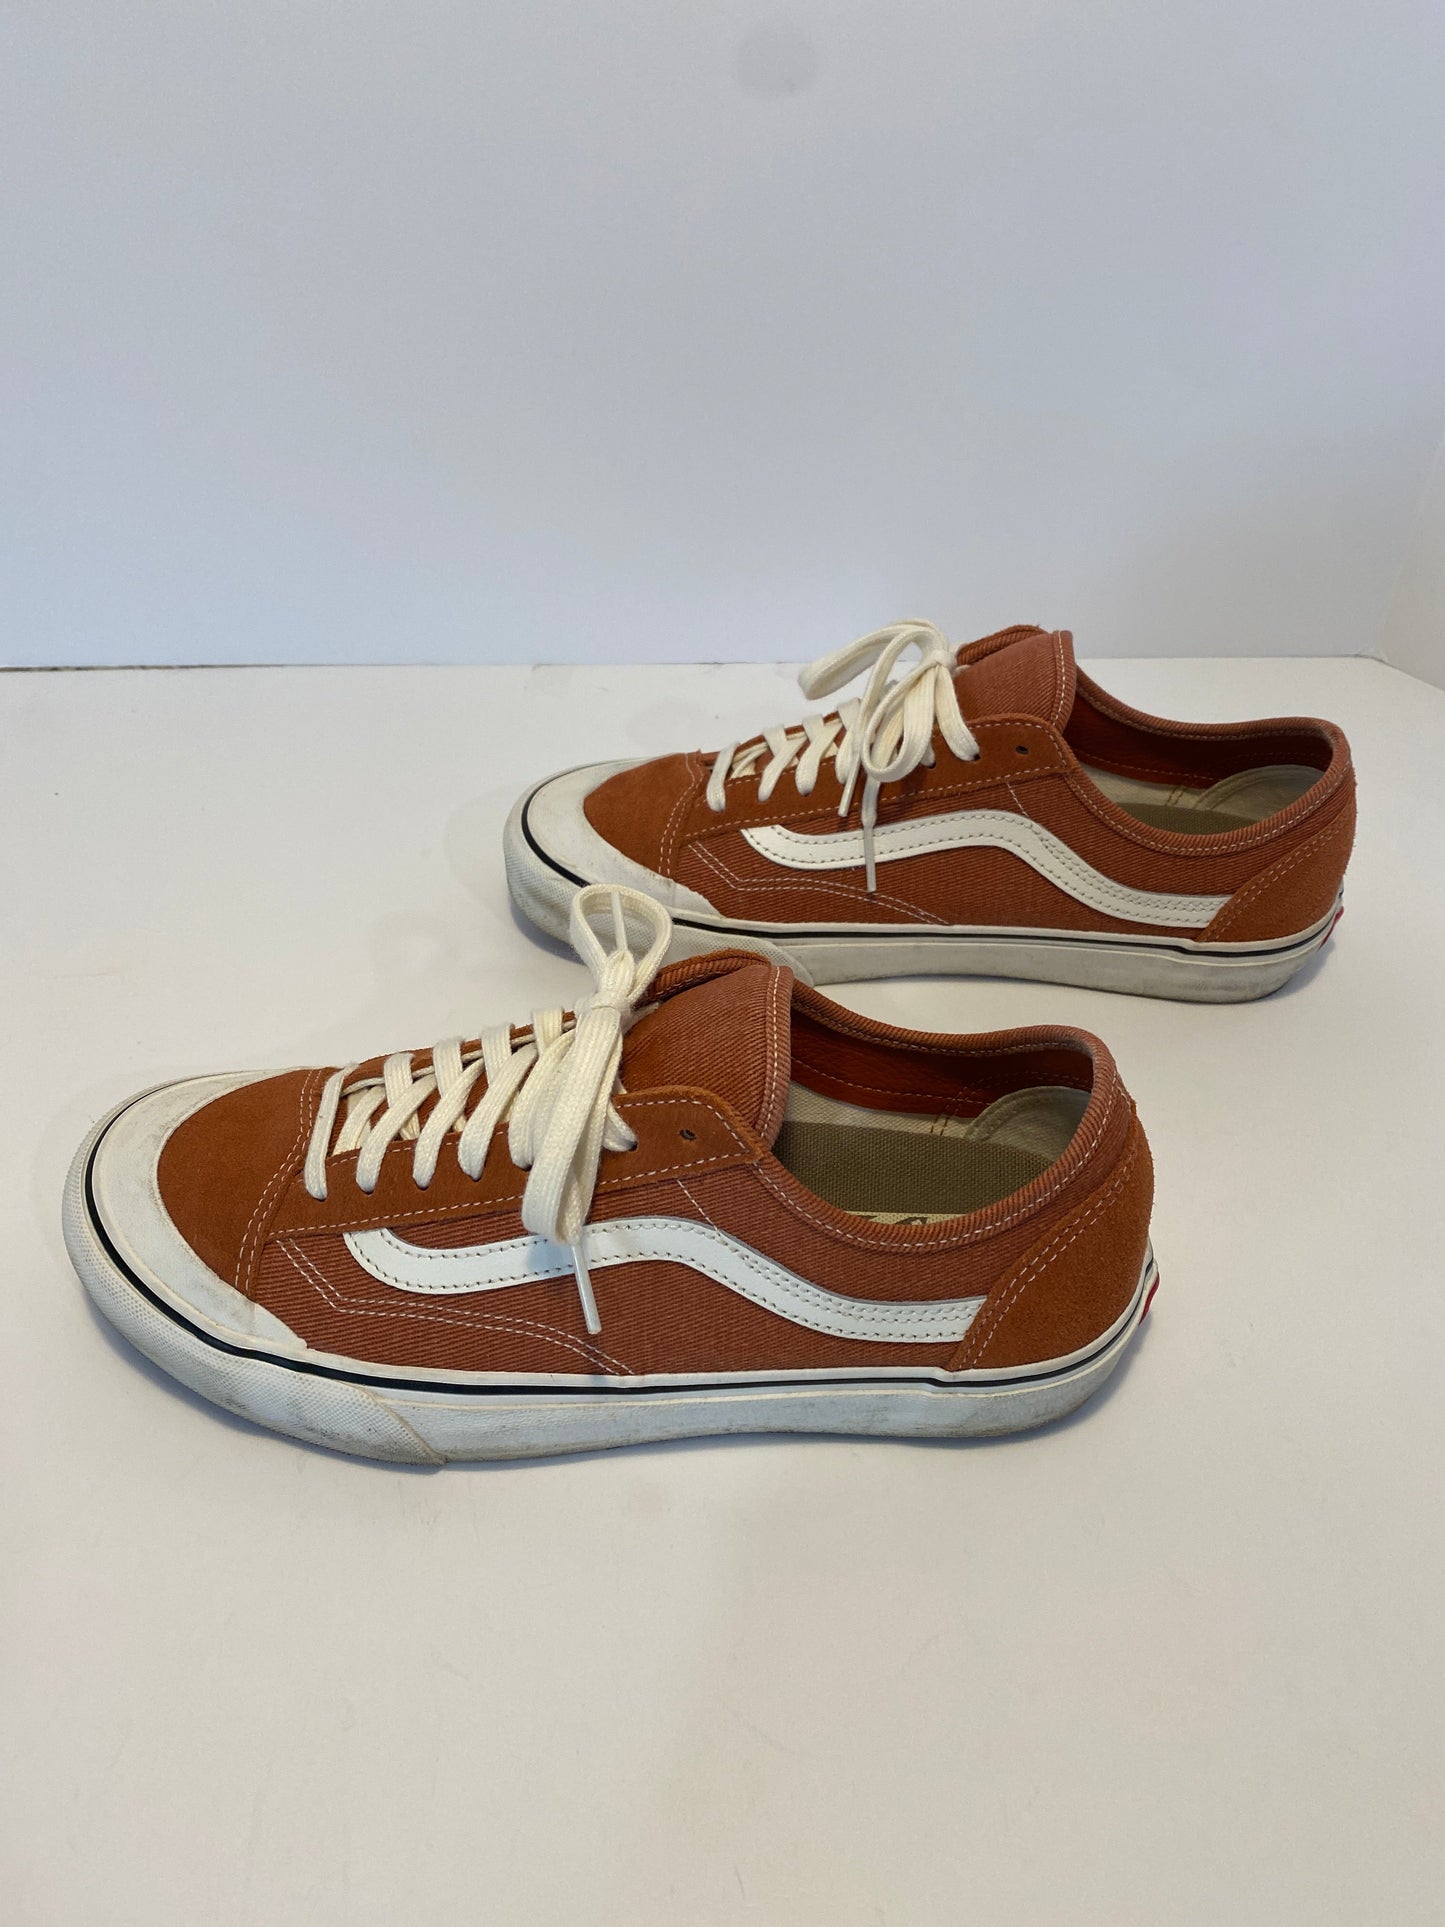 Brown Shoes Sneakers Vans, Size 10